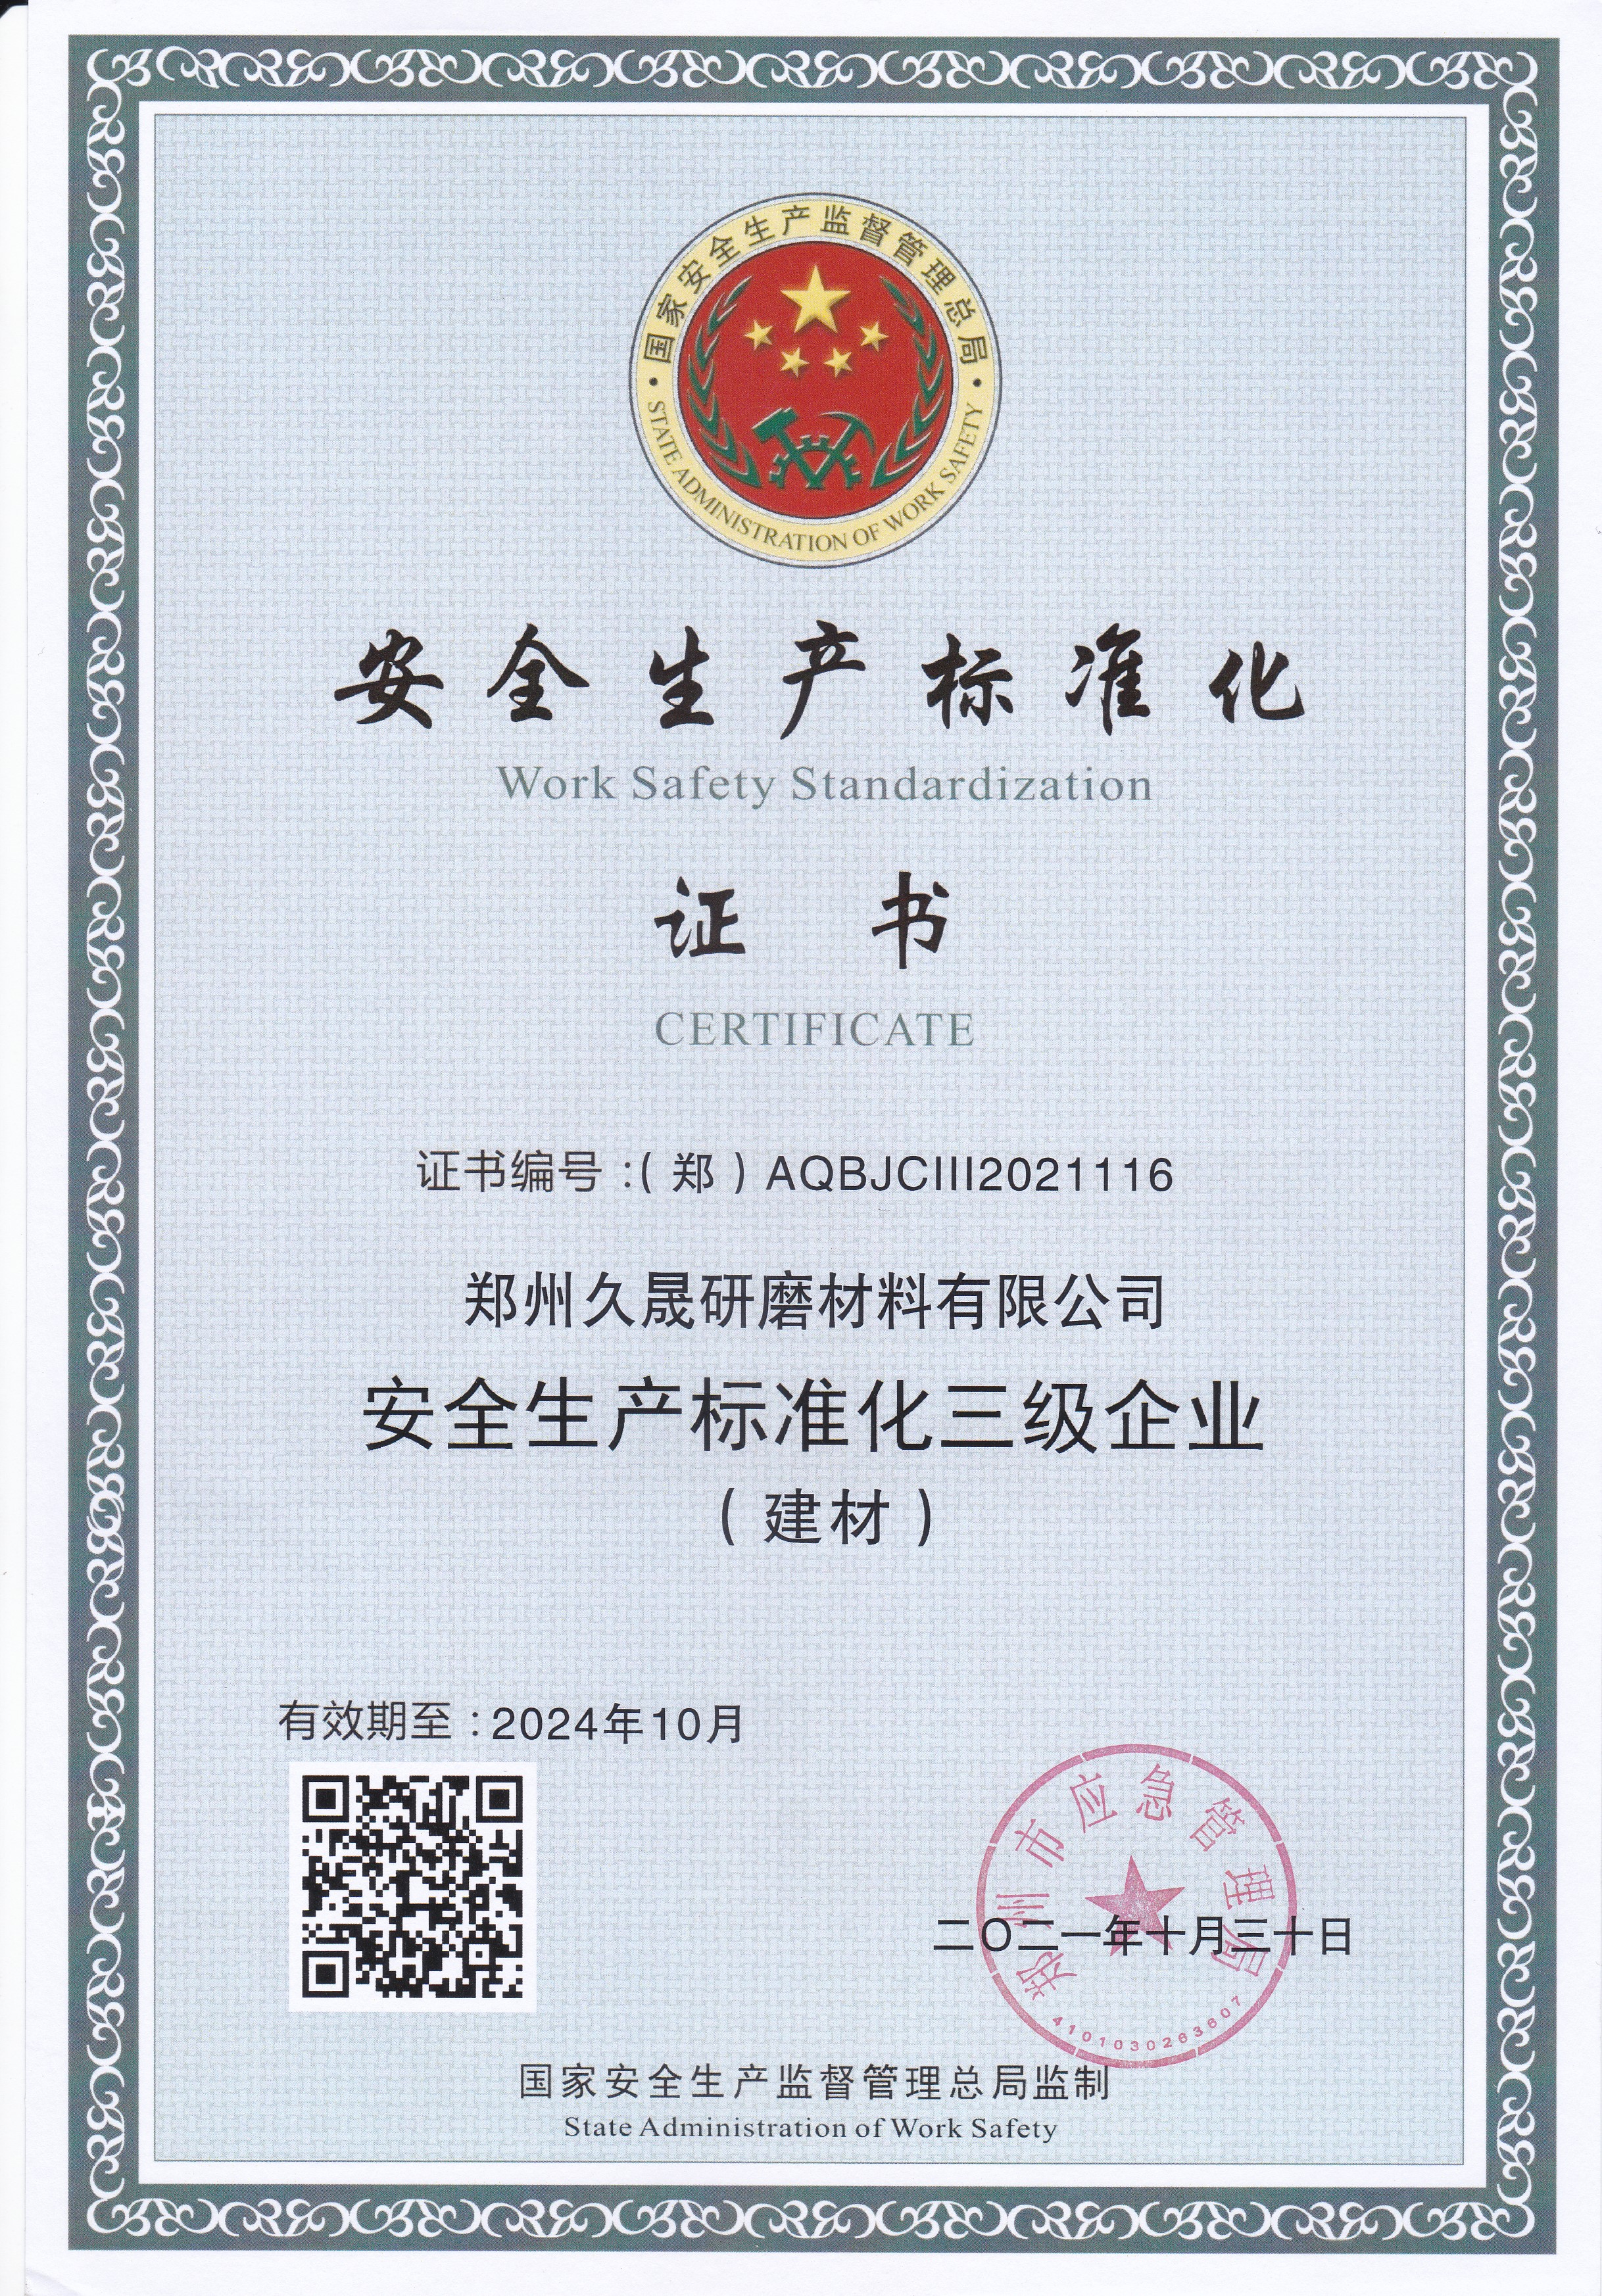  certification